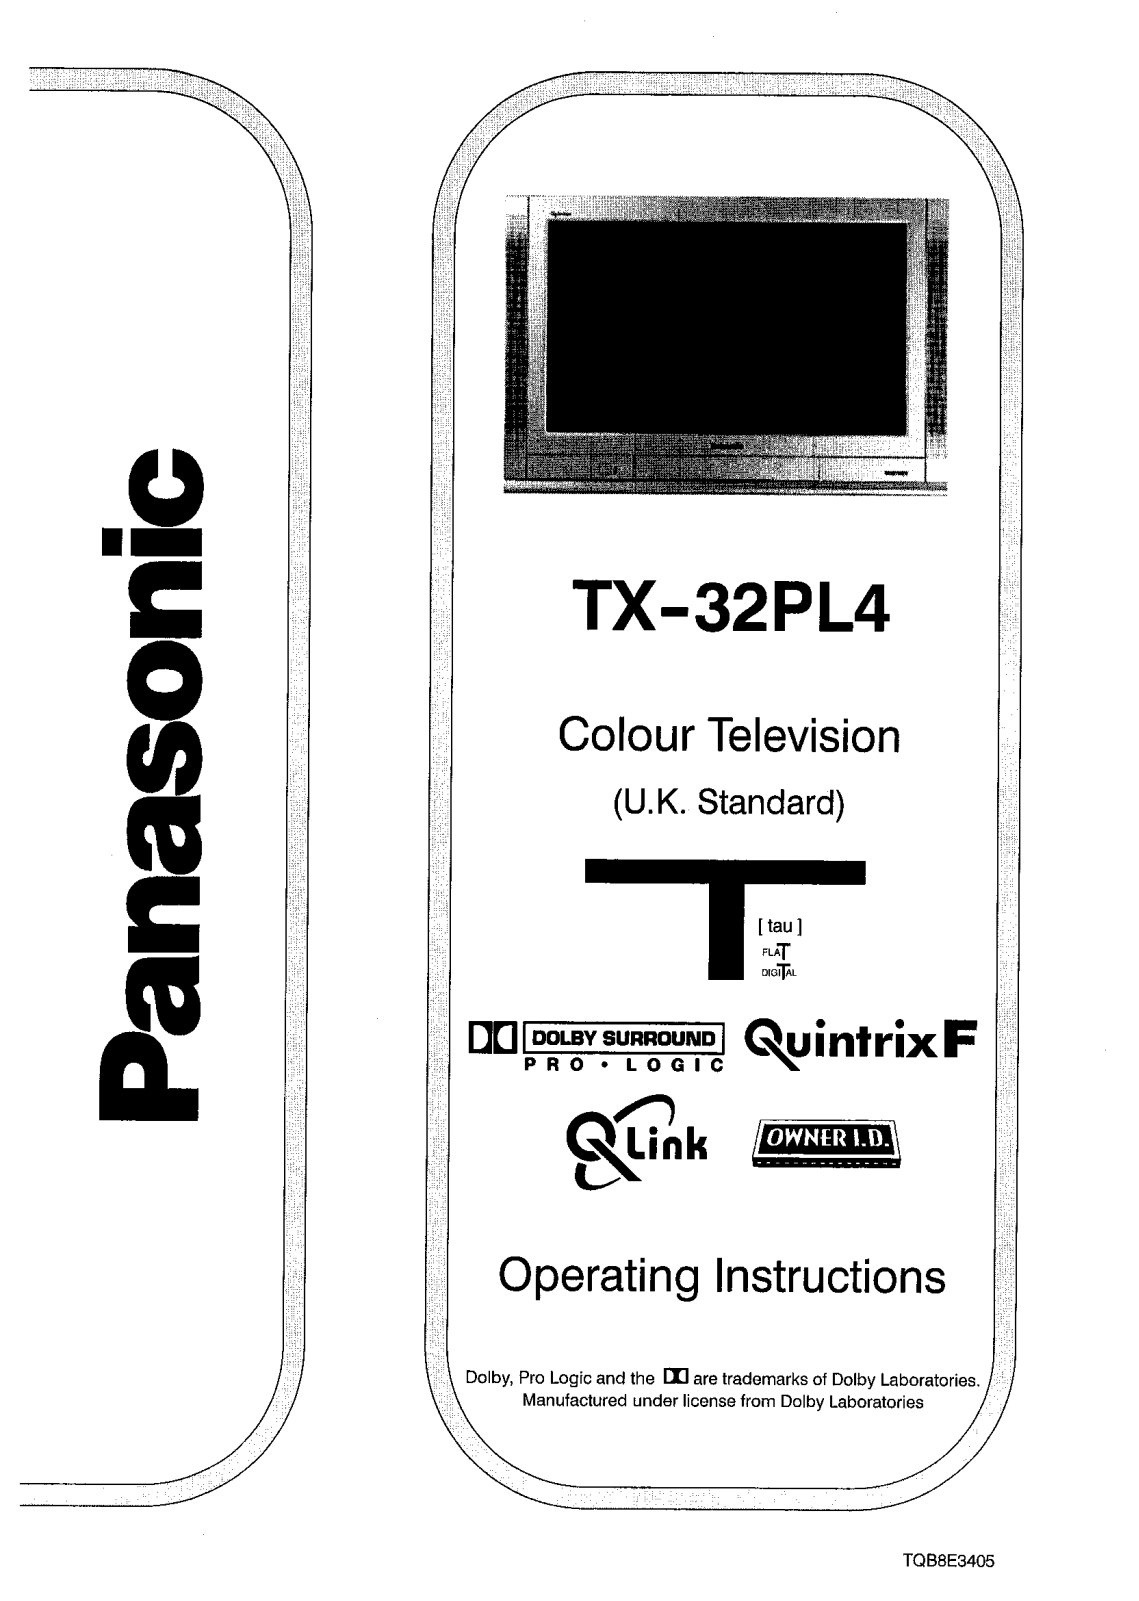 PANASONIC TX-32PL4 User Manual